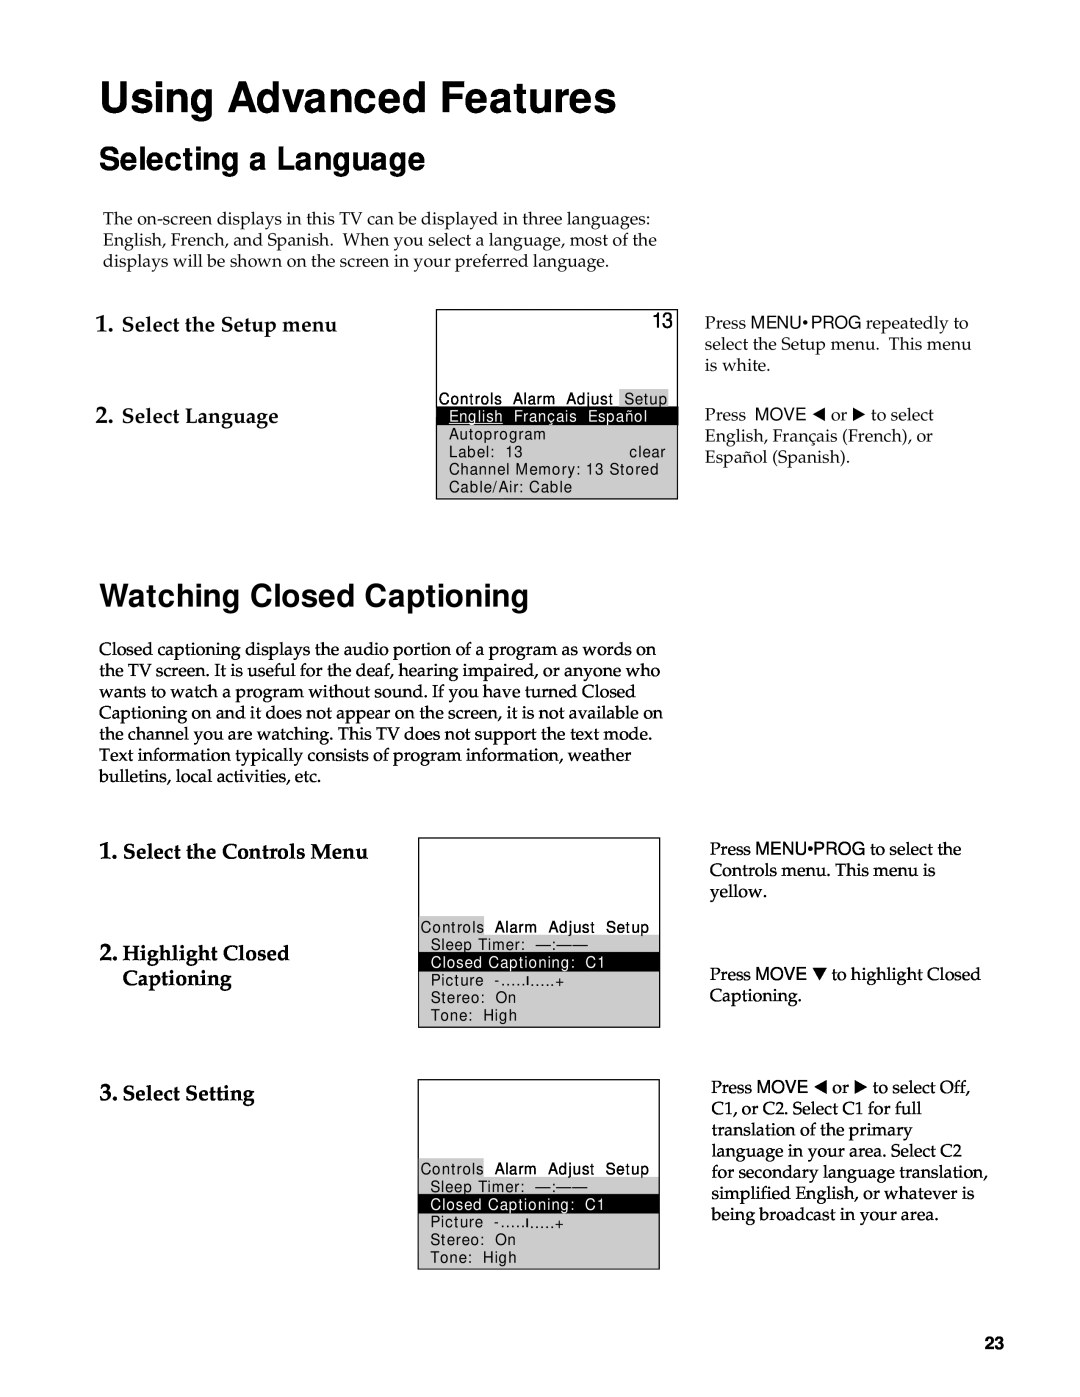 RCA Color TV Selecting a Language, Watching Closed Captioning, Select the Setup menu 2. Select Language, Select Setting 